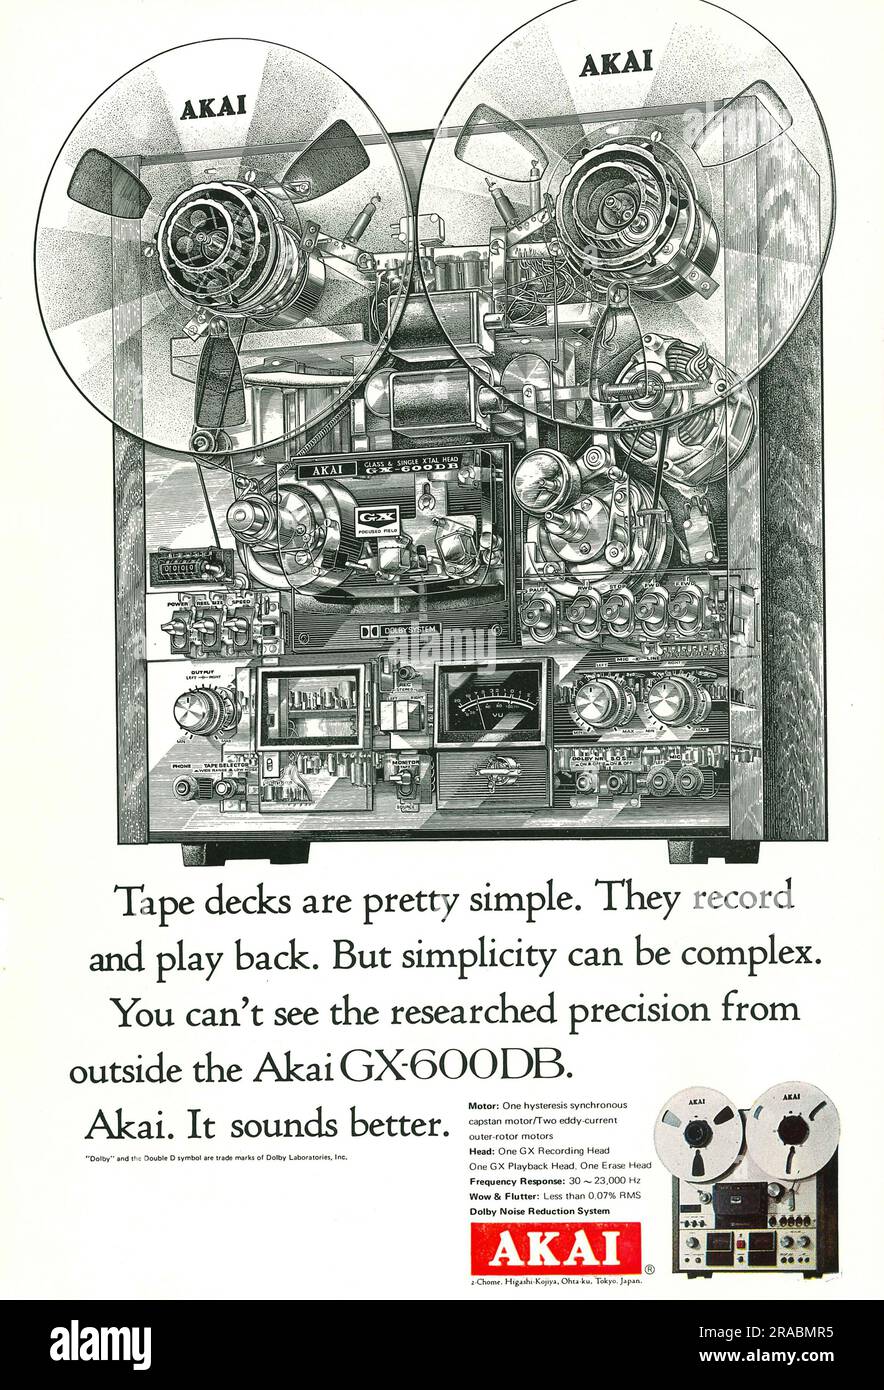 AKAI GX 600 DB tape decks advert in a Natgeo magazine, 1974 Stock Photo